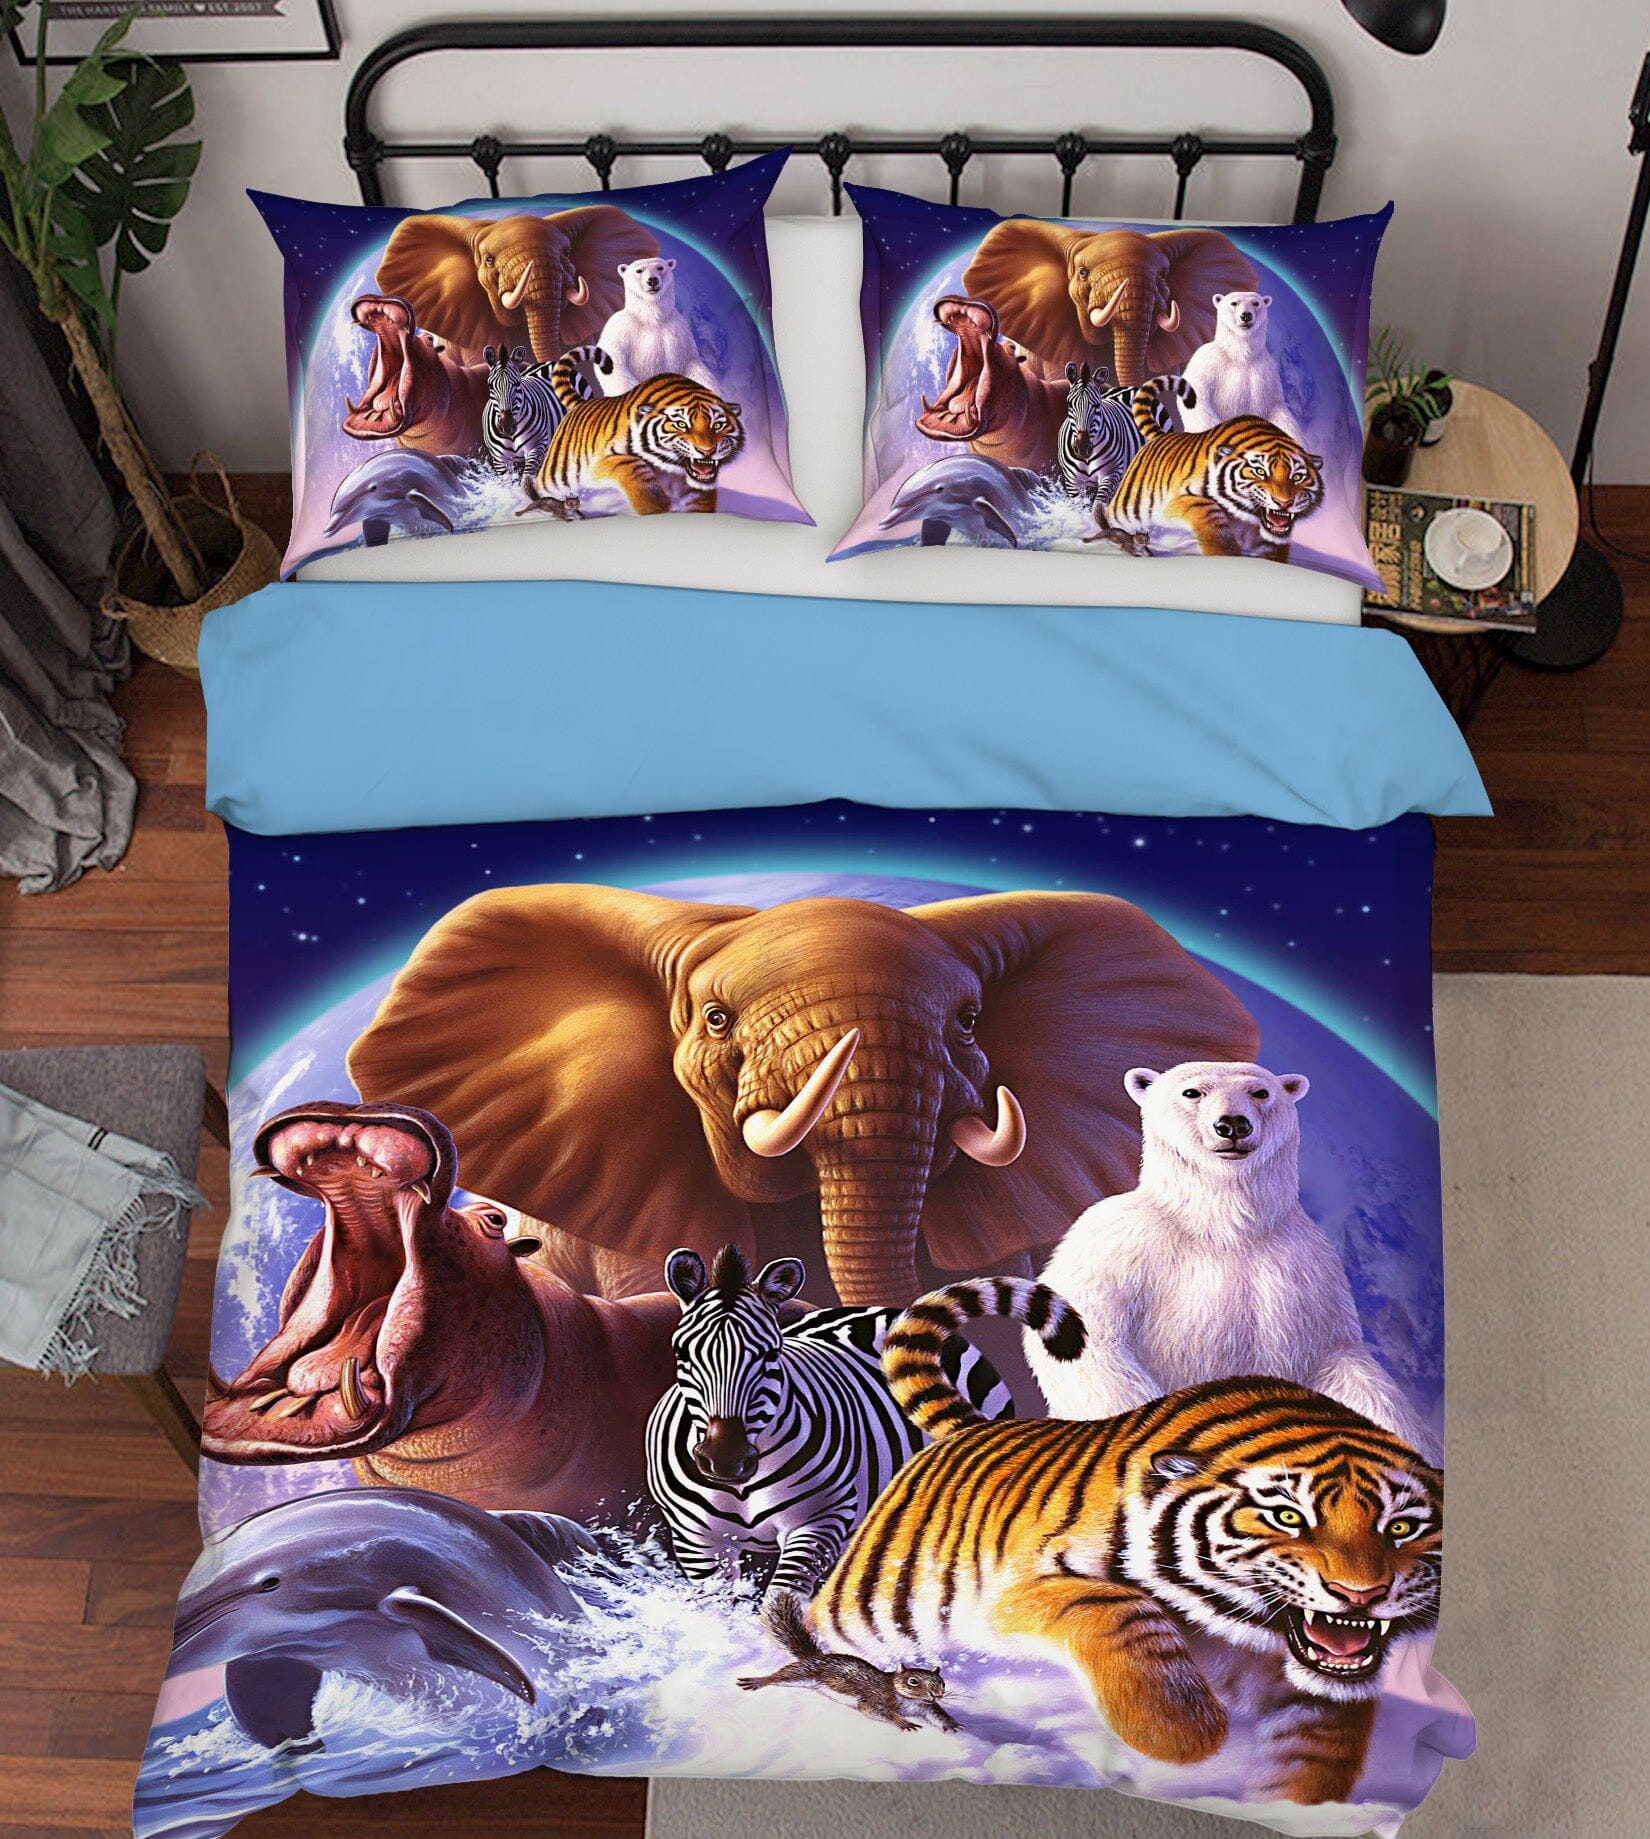 3D Wild World 2137 Jerry LoFaro bedding Bed Pillowcases Quilt Quiet Covers AJ Creativity Home 